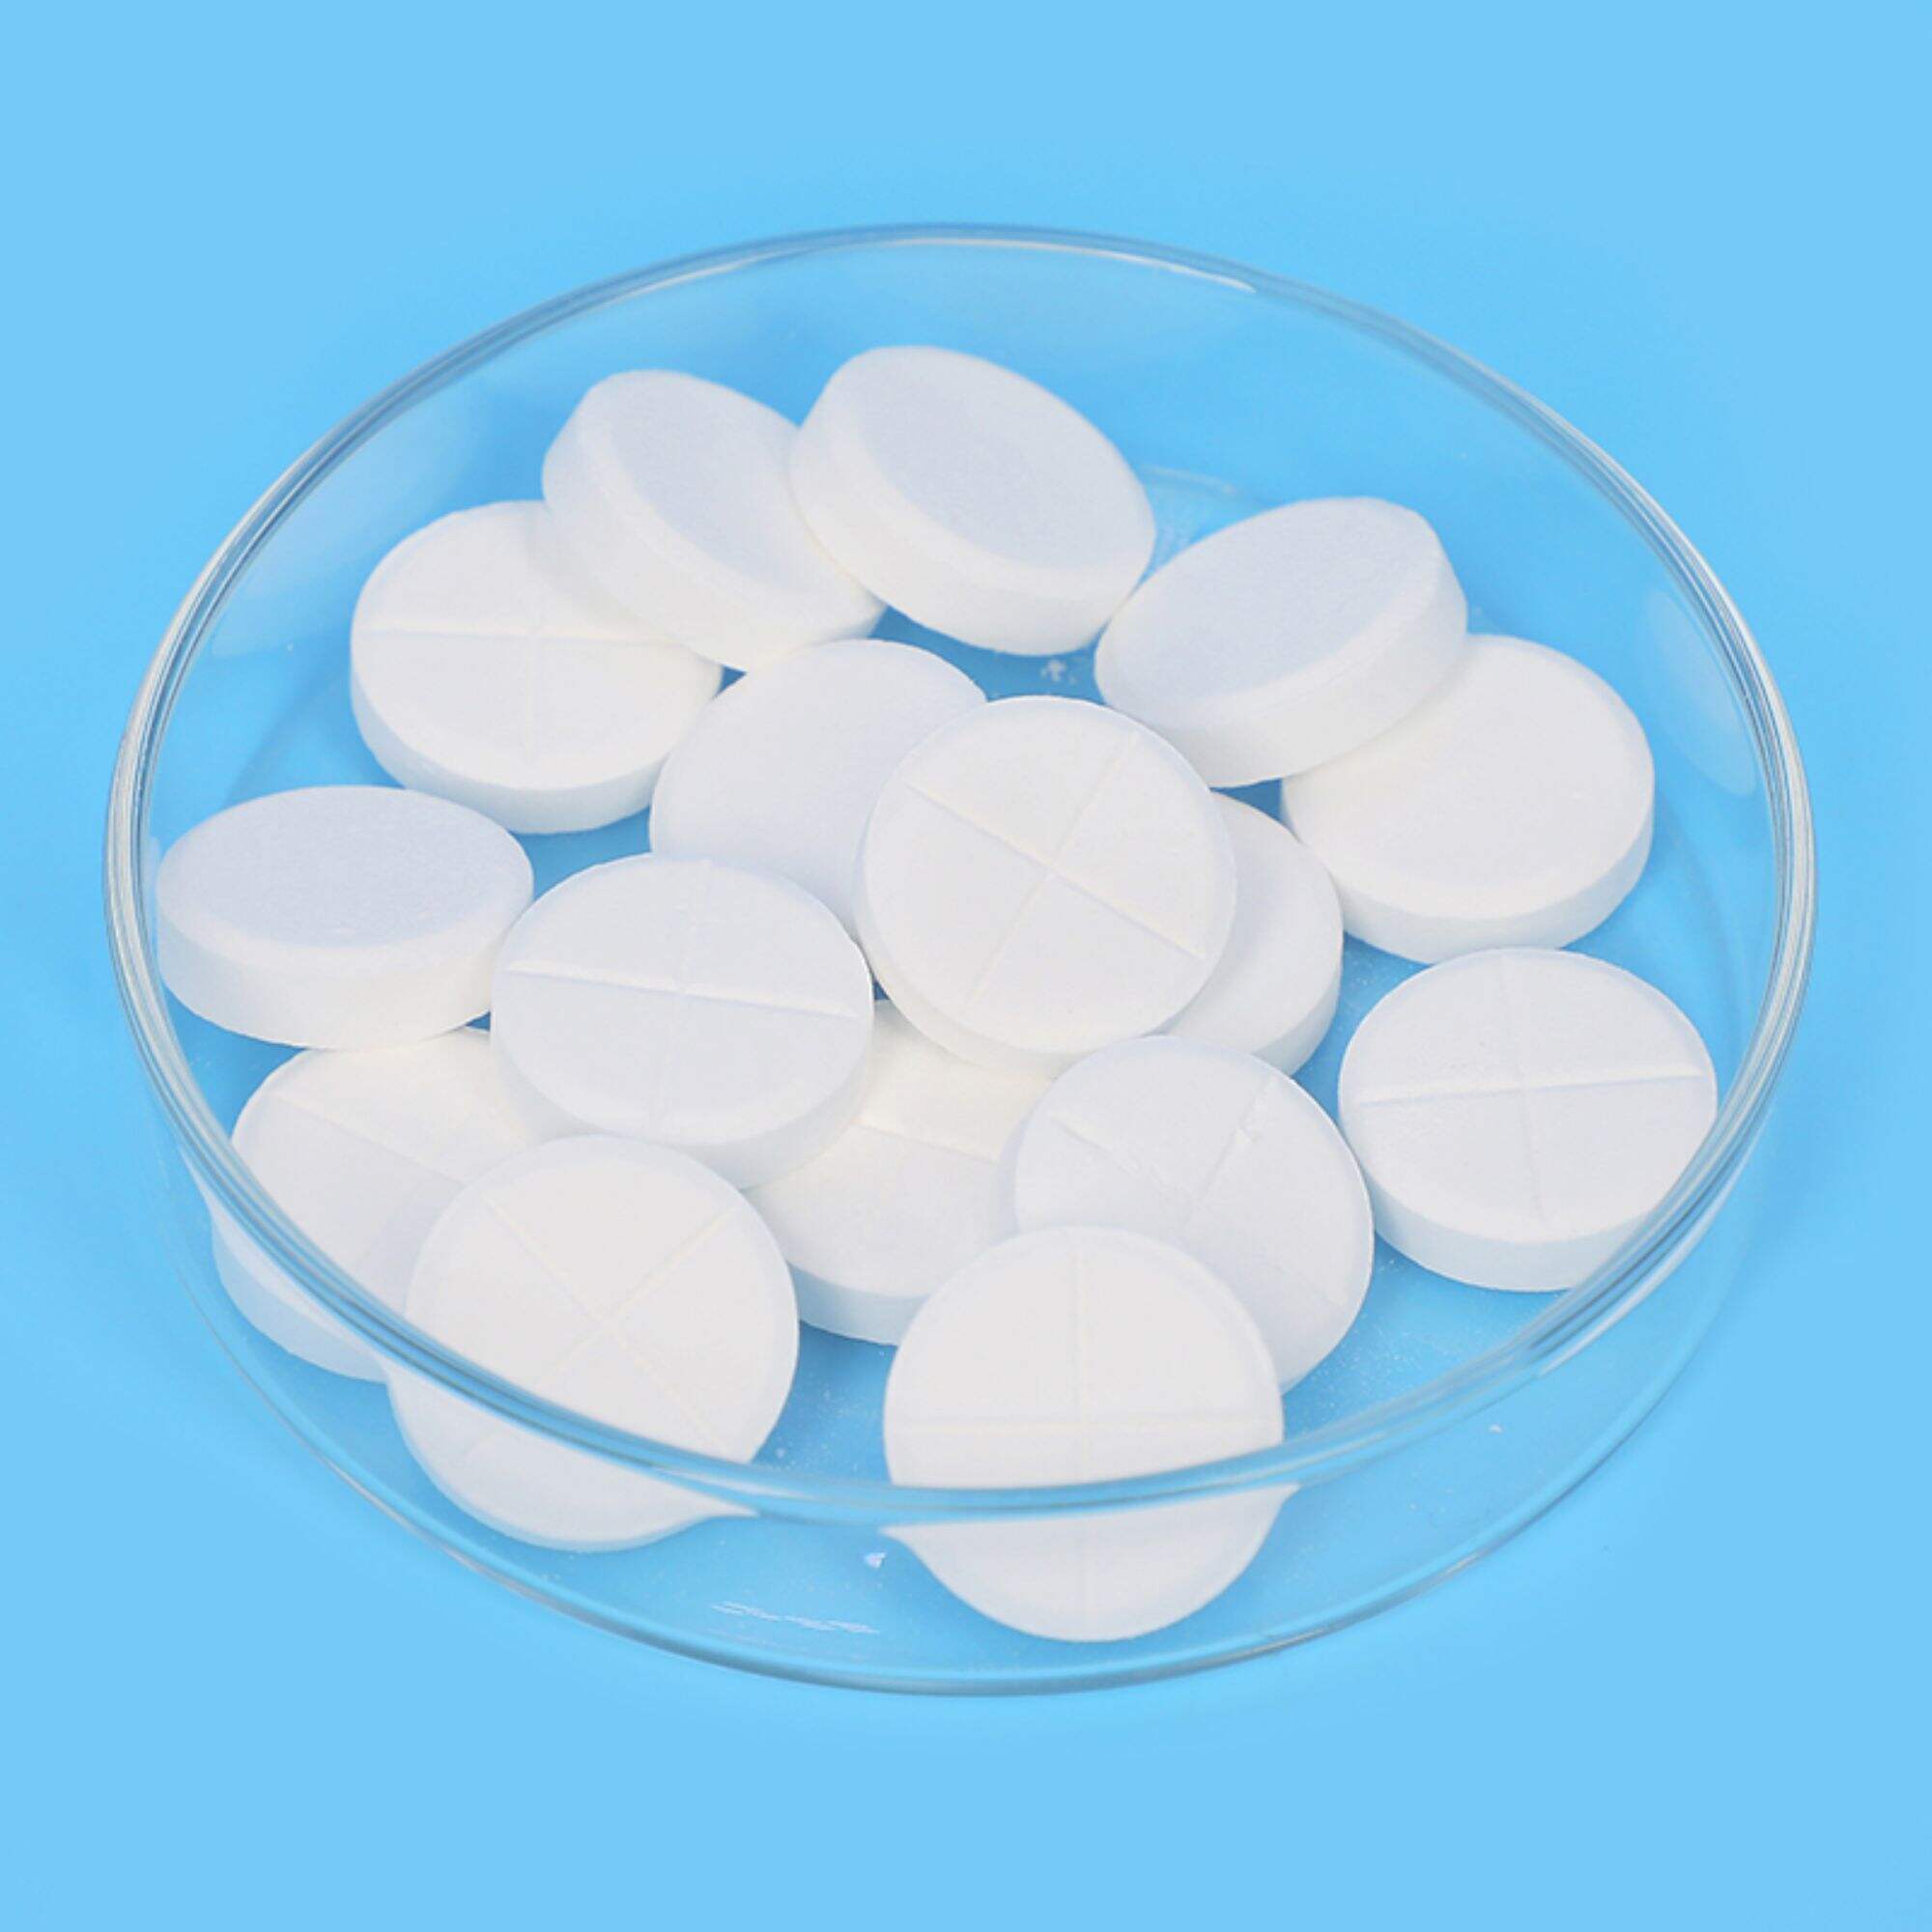 Pool chlorine effervescent tablets SDIC Sodium dichloroisocyanurate (SDIC)